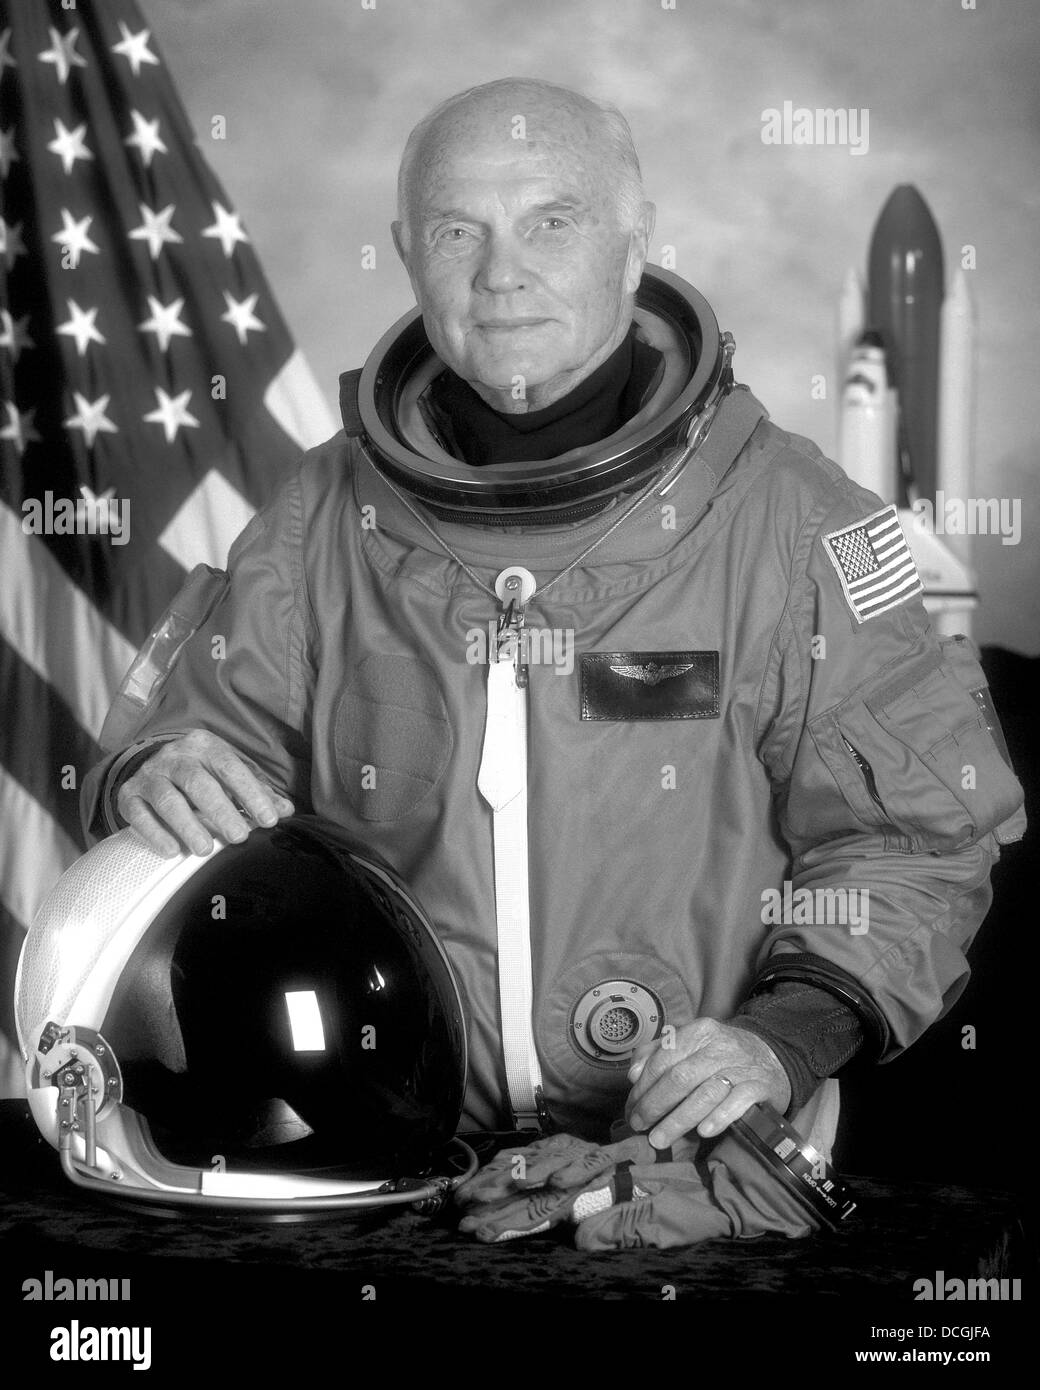 Digitally restored American history photo of astronaut John Glenn. Stock Photo